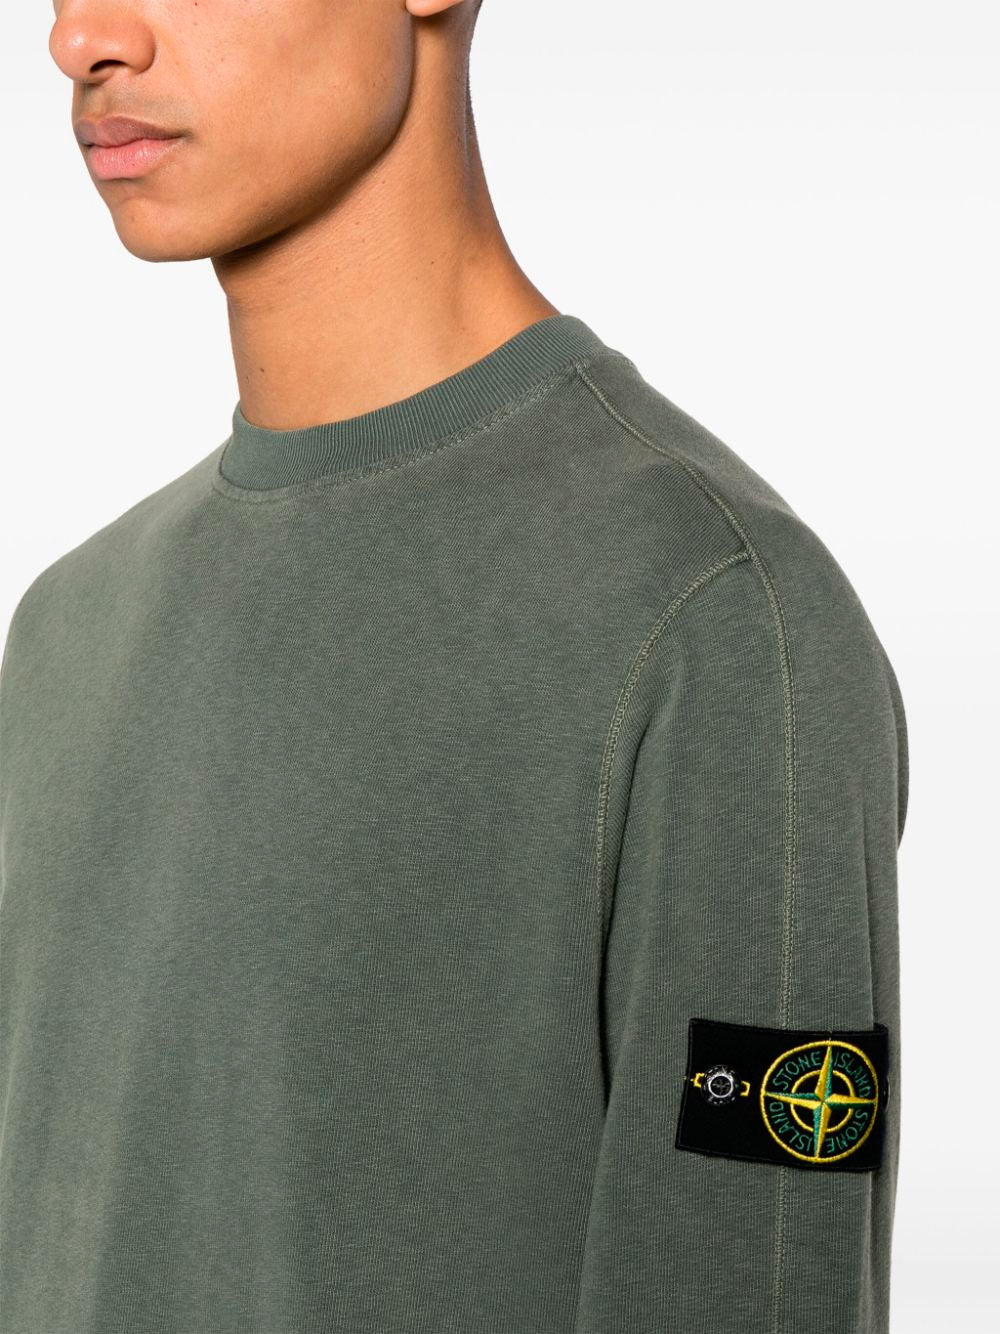 Compass-badge sweatshirt